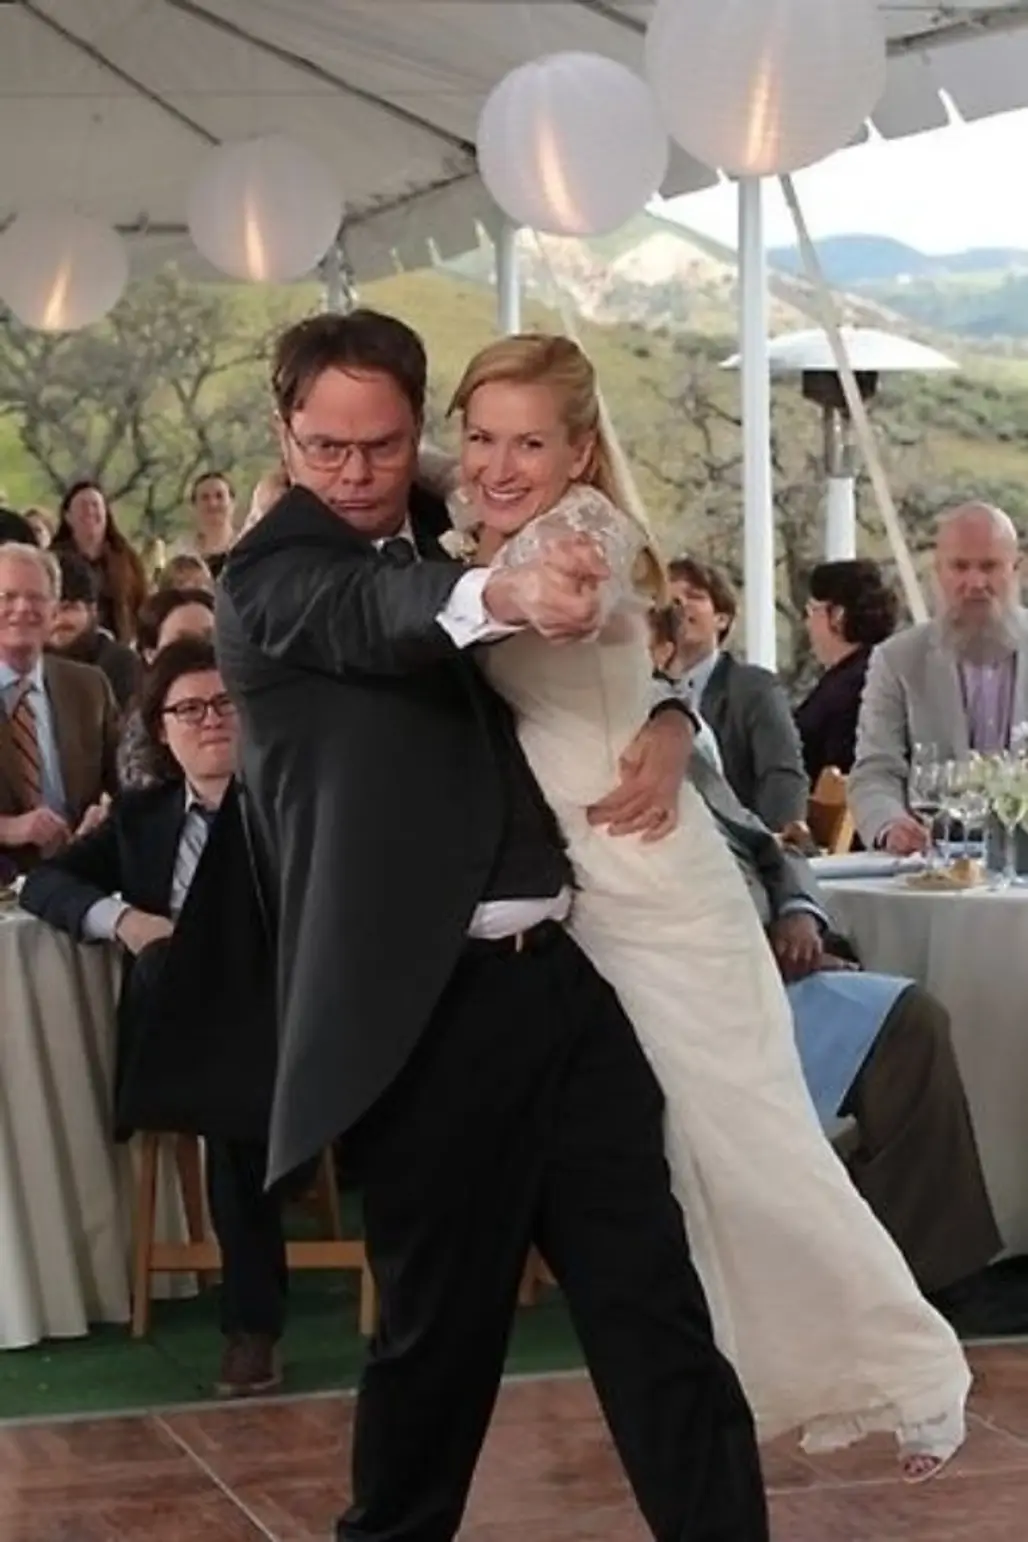 Dwight and Angela